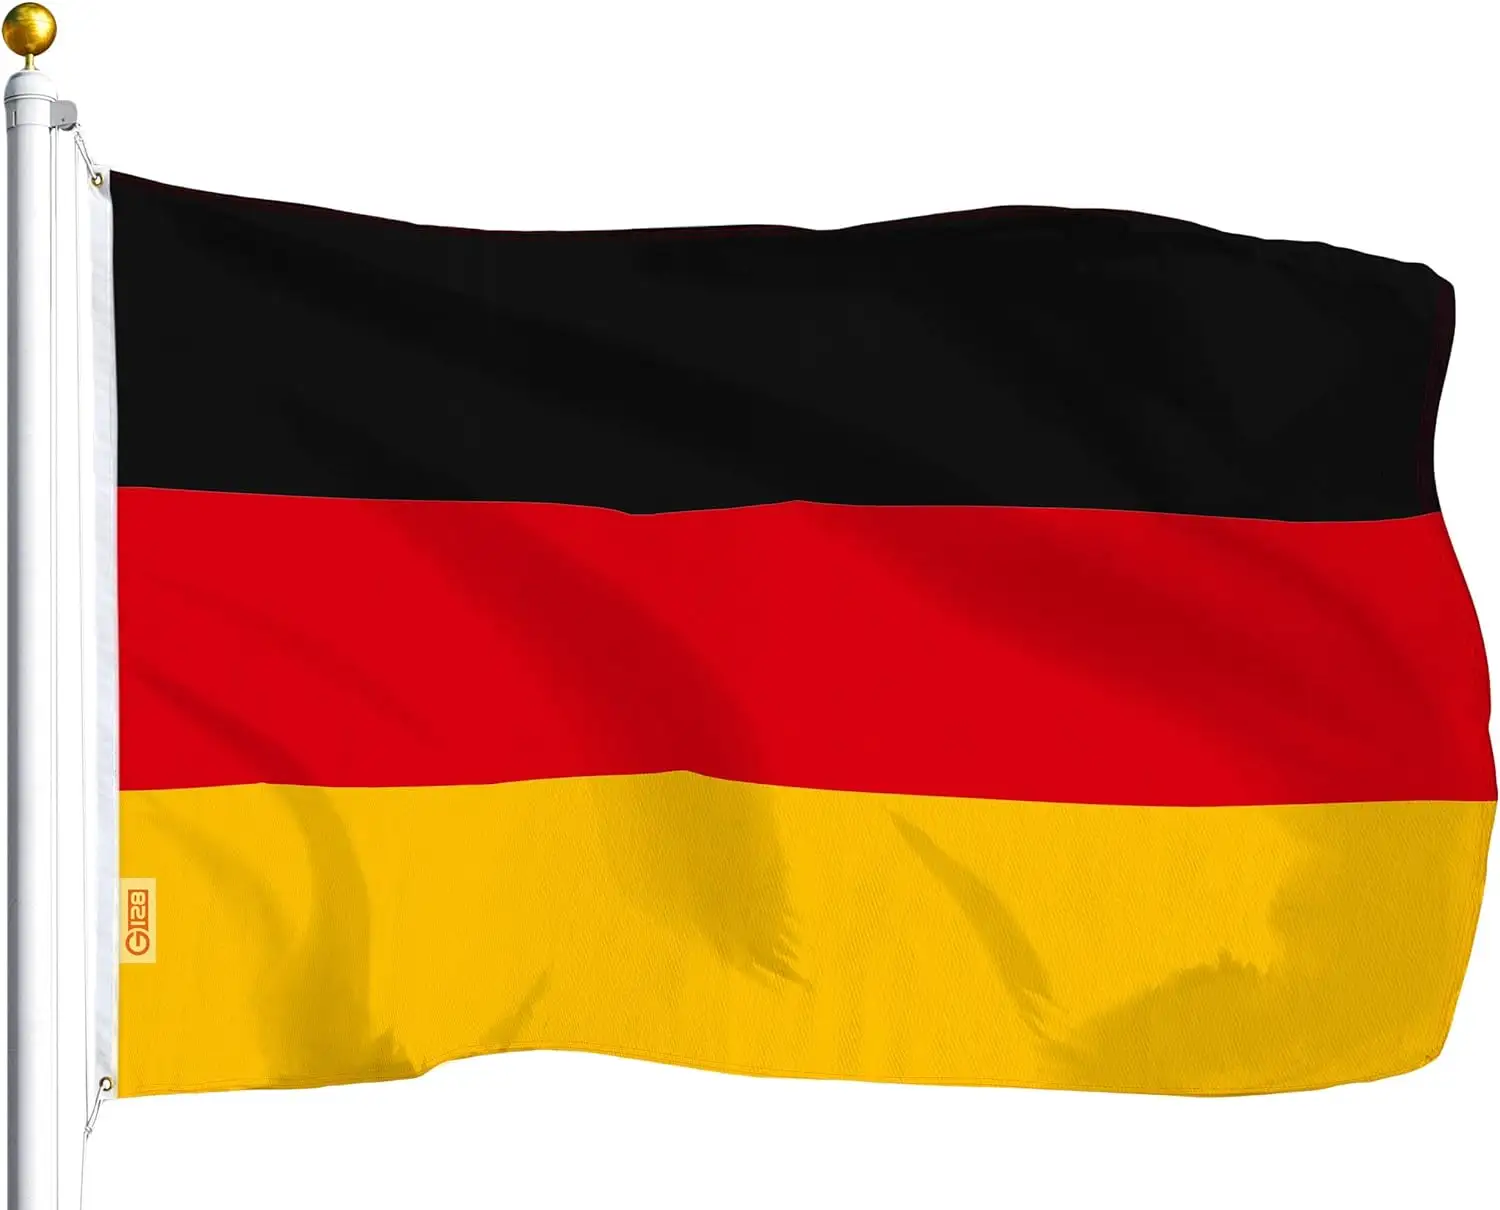 प्रोमोशनल जर्मनी राष्ट्रीय ध्वज 3x5 एफटी 150X90 सेमी बैनर - ज्वलंत रंग और यूवी फीका प्रतिरोधी - जर्मन ध्वज